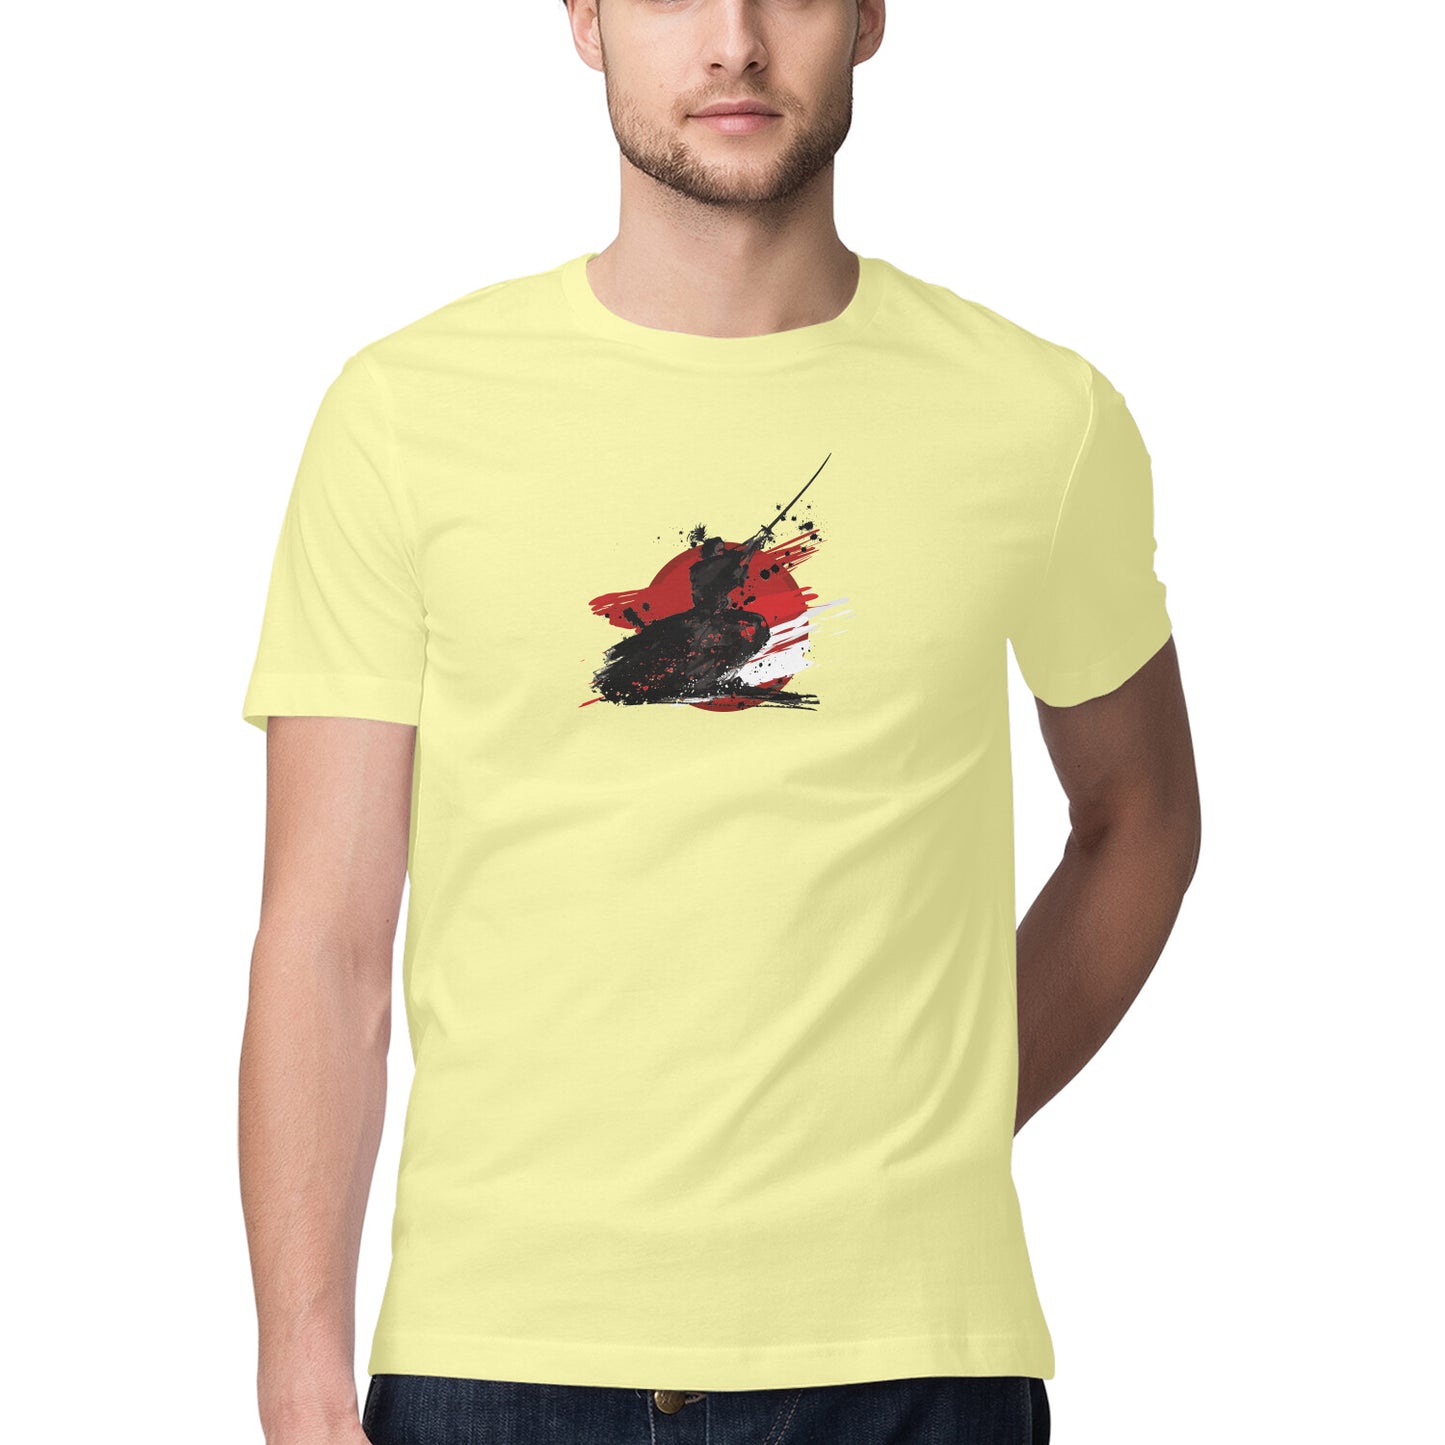 Samurai Printed Graphic T-Shirt